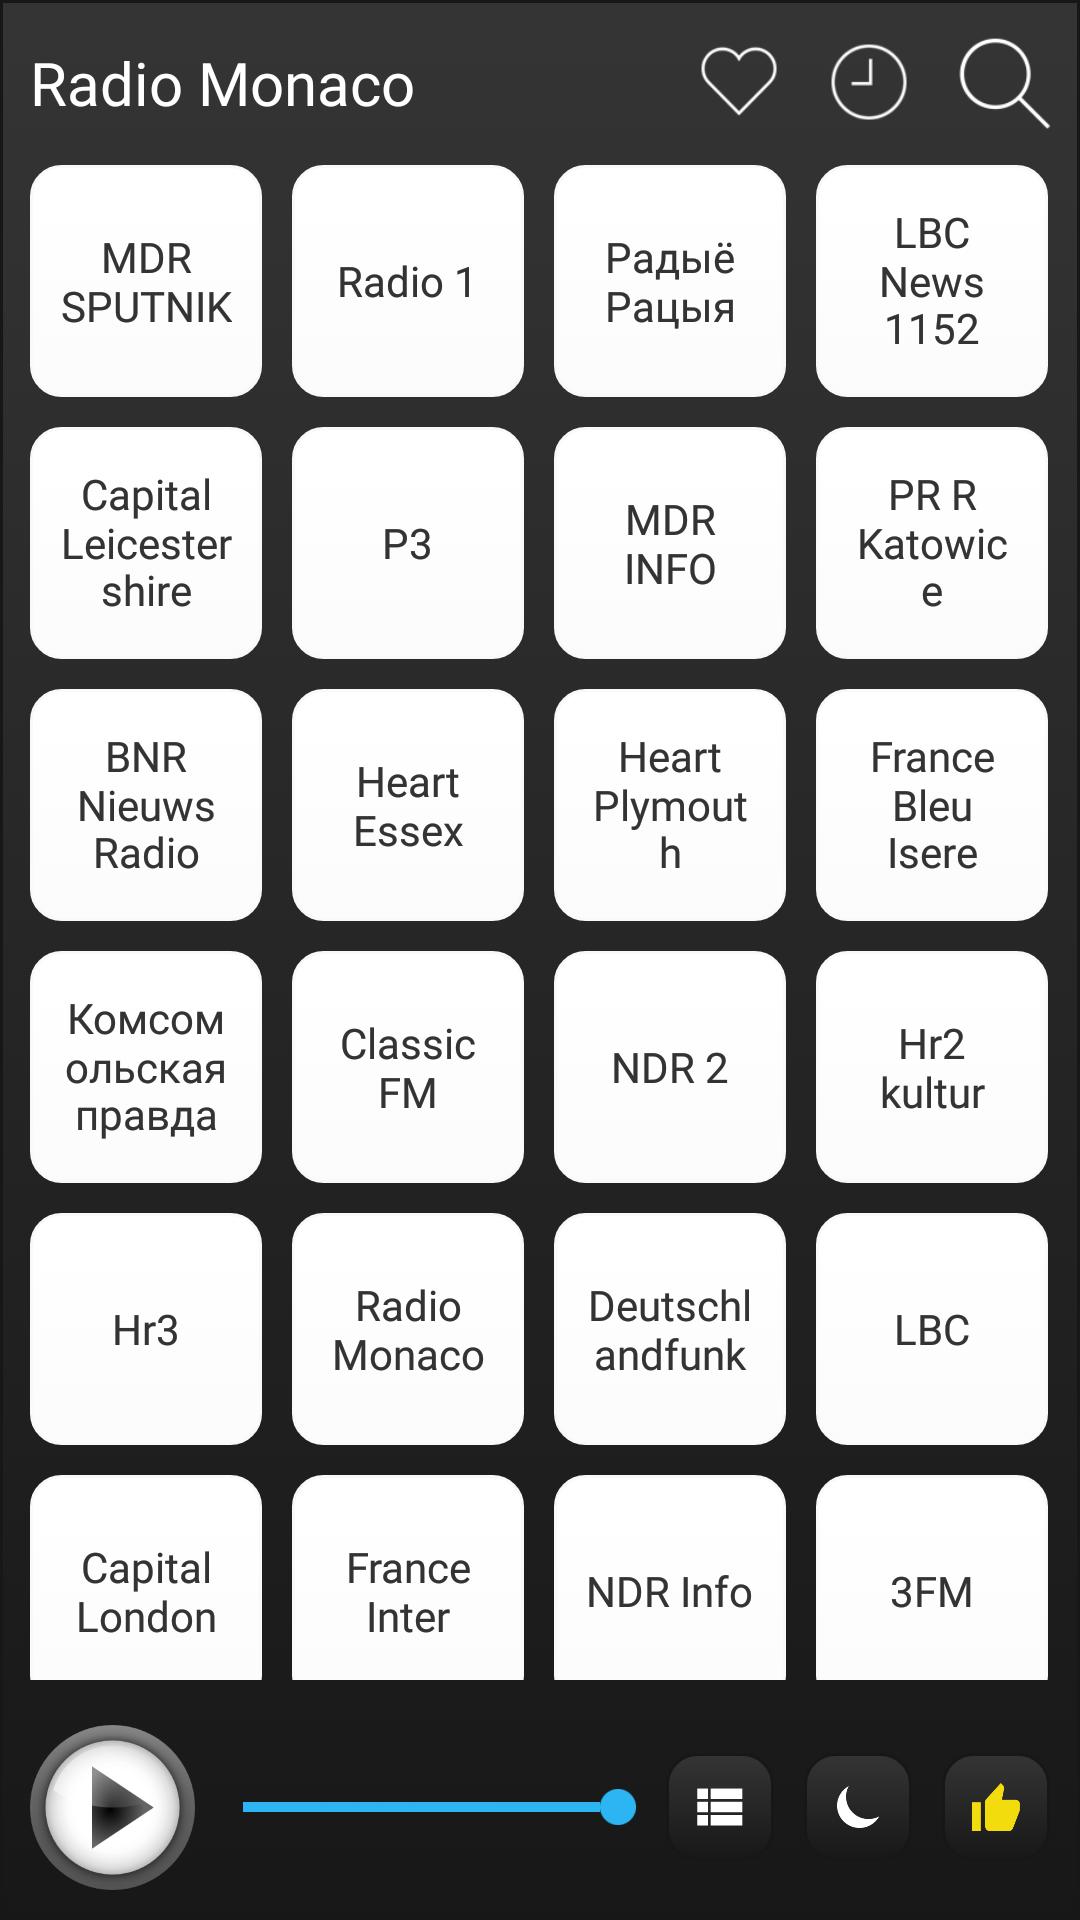 Monaco Radio Stations Online - Monaco FM AM Music for Android - APK Download